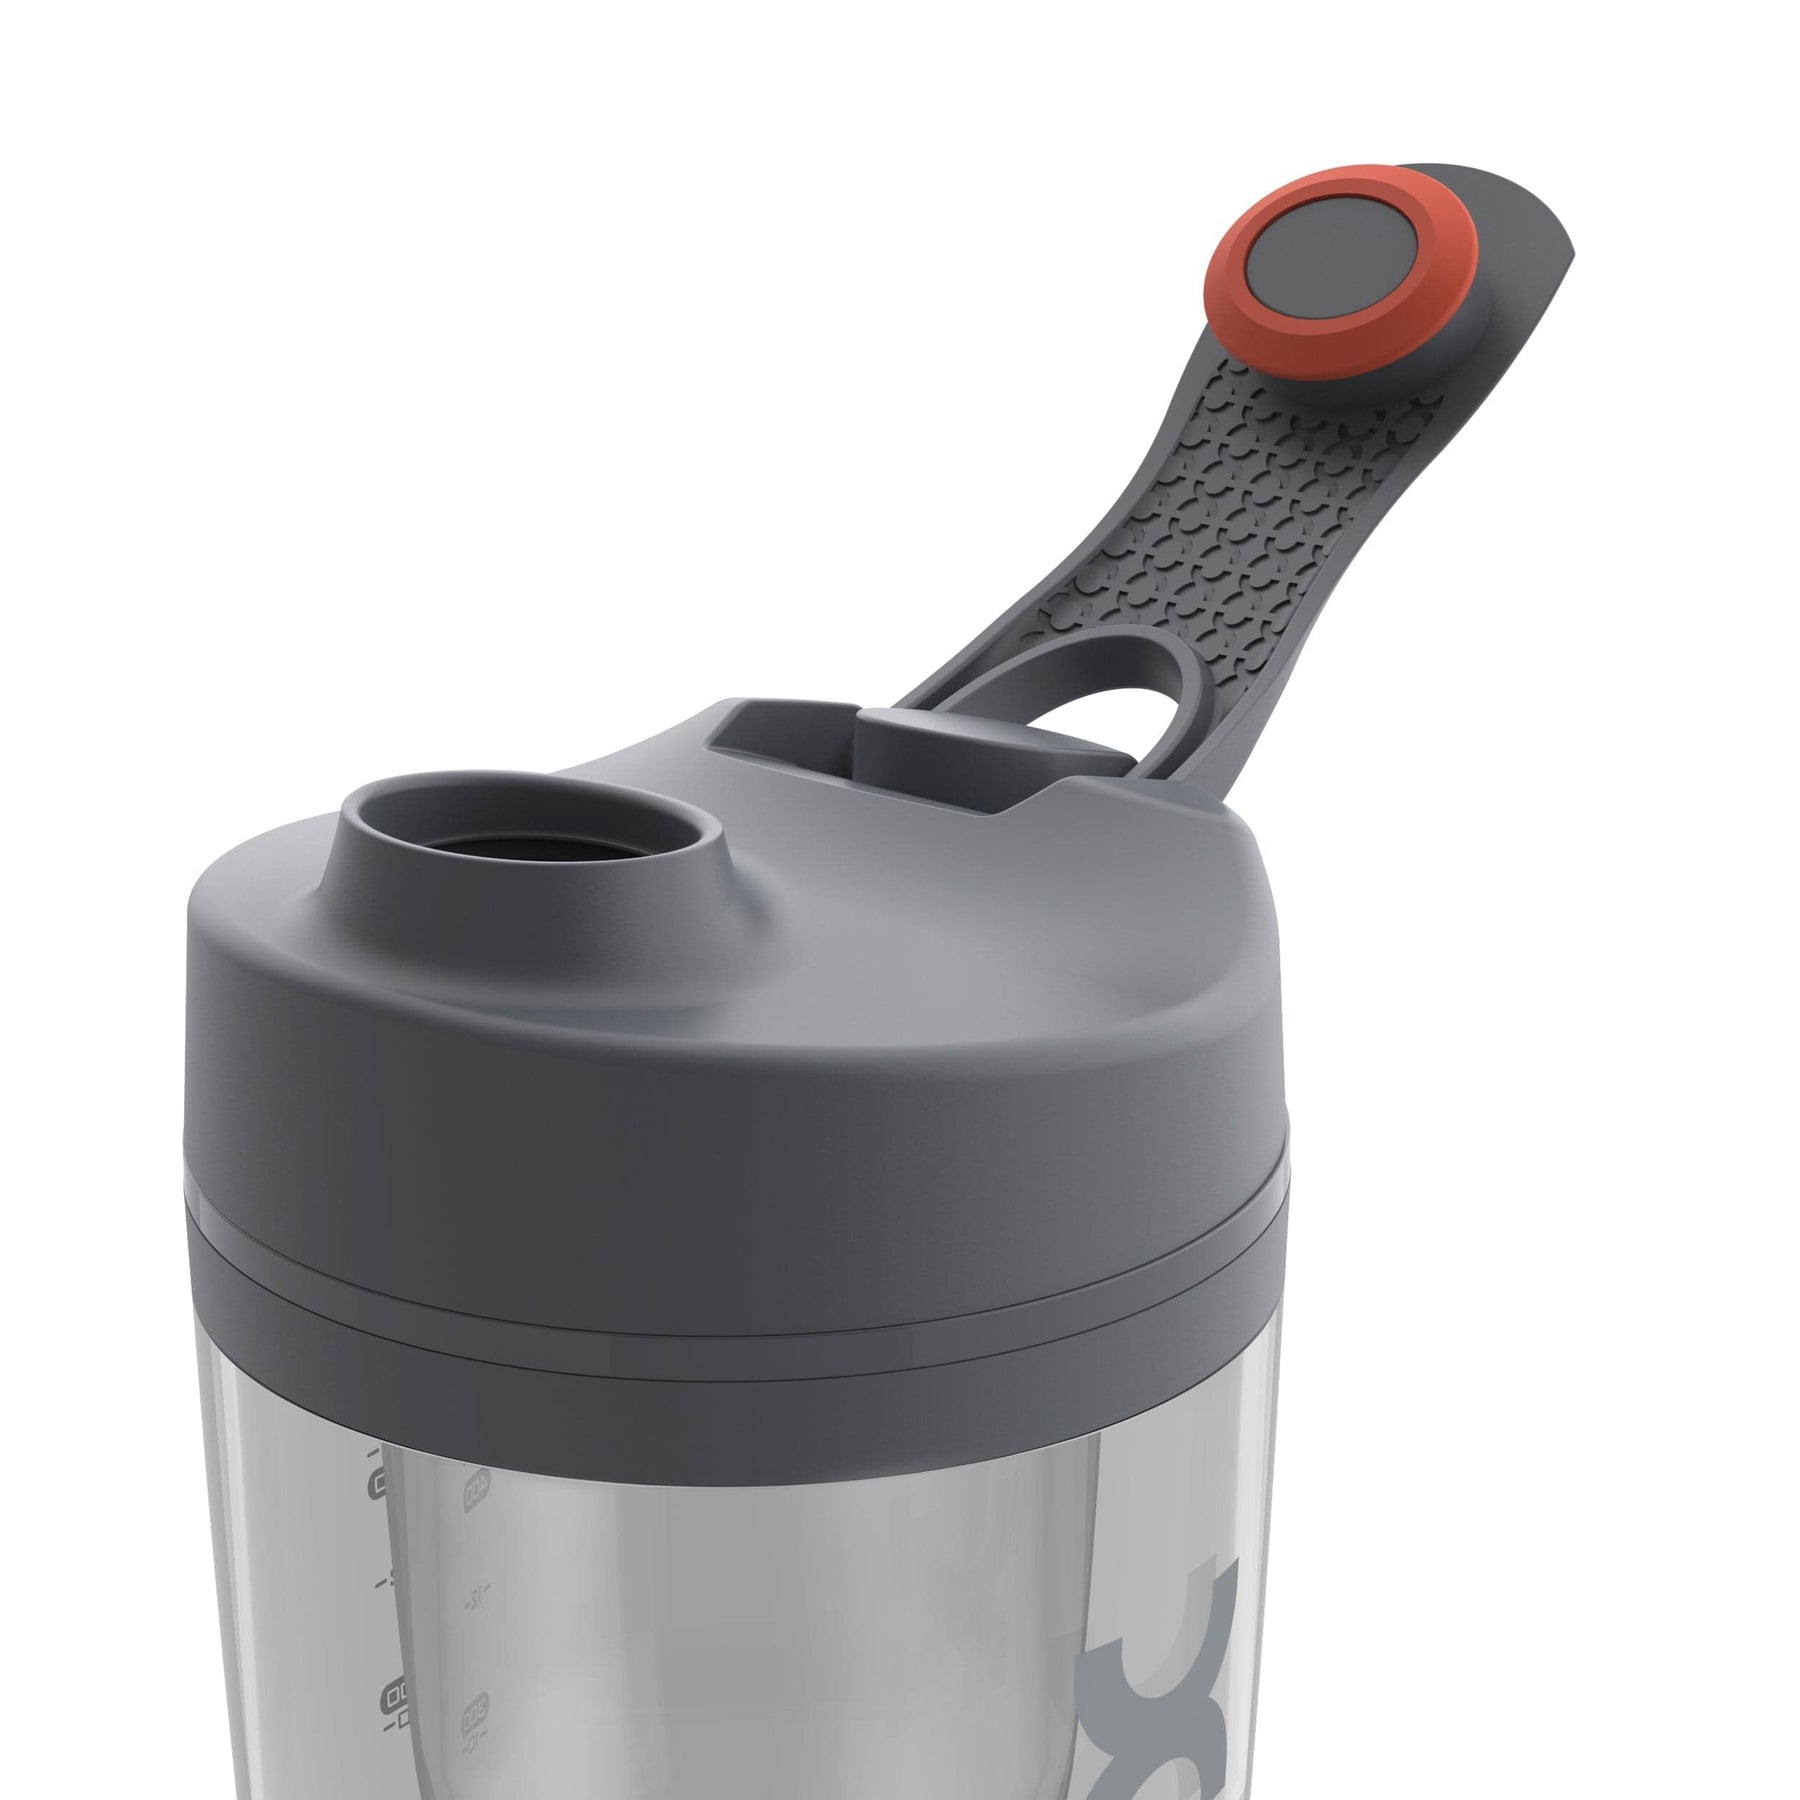 Promixx MiiXR Electric Shaker Bottle - Black/Gray - 20oz